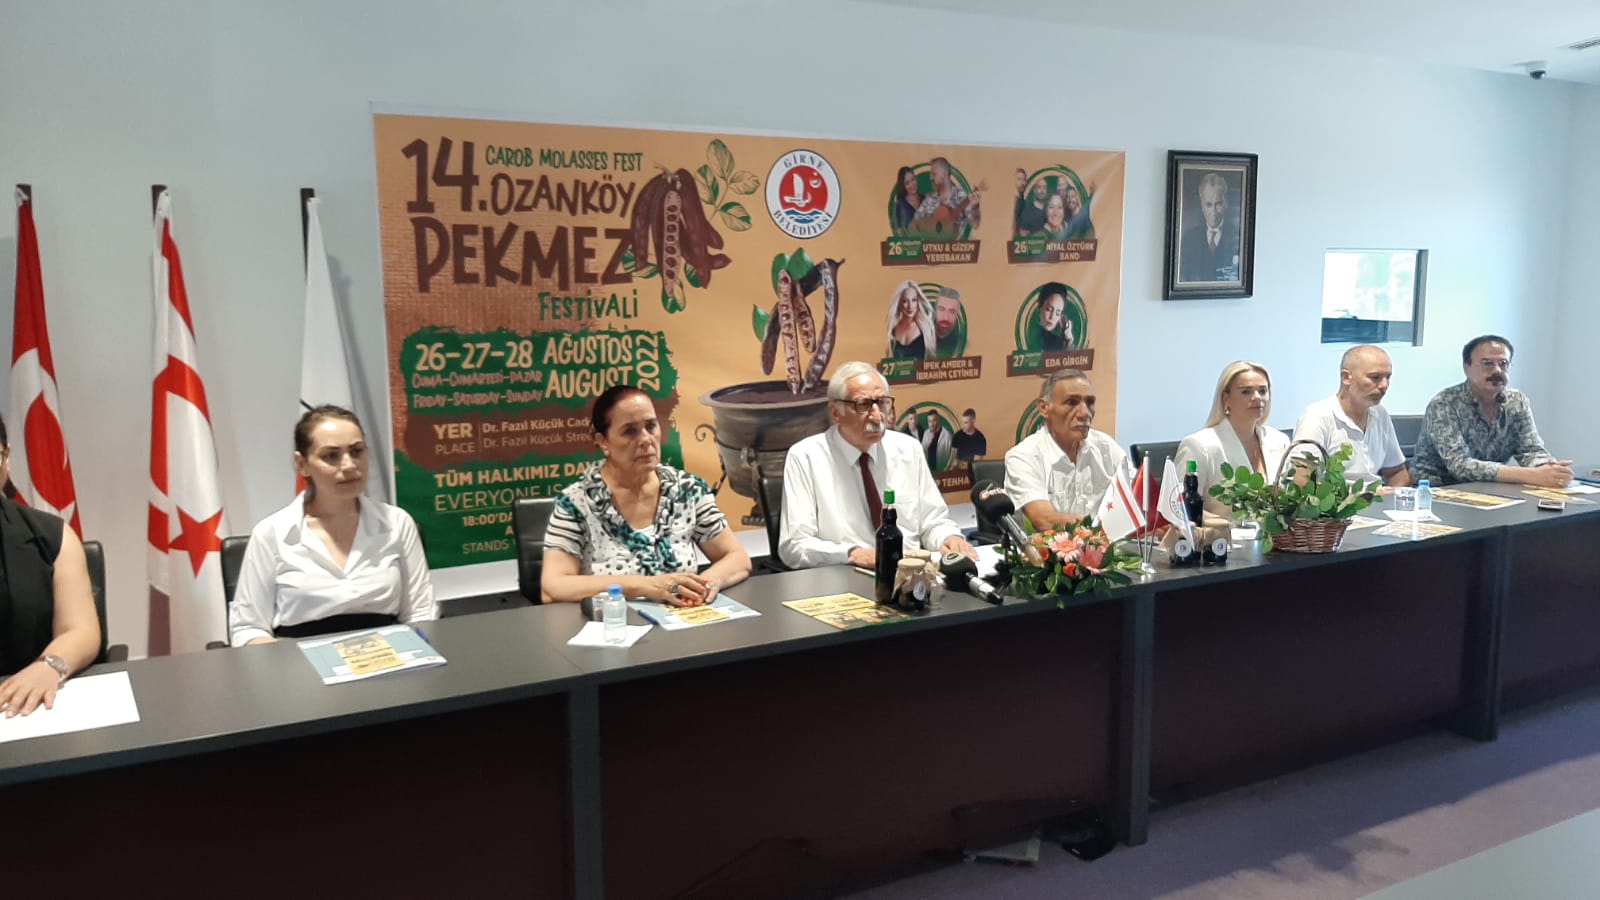 14.Ozanköy Pekmez Festivali 26 Ağustos’ta başlıyor